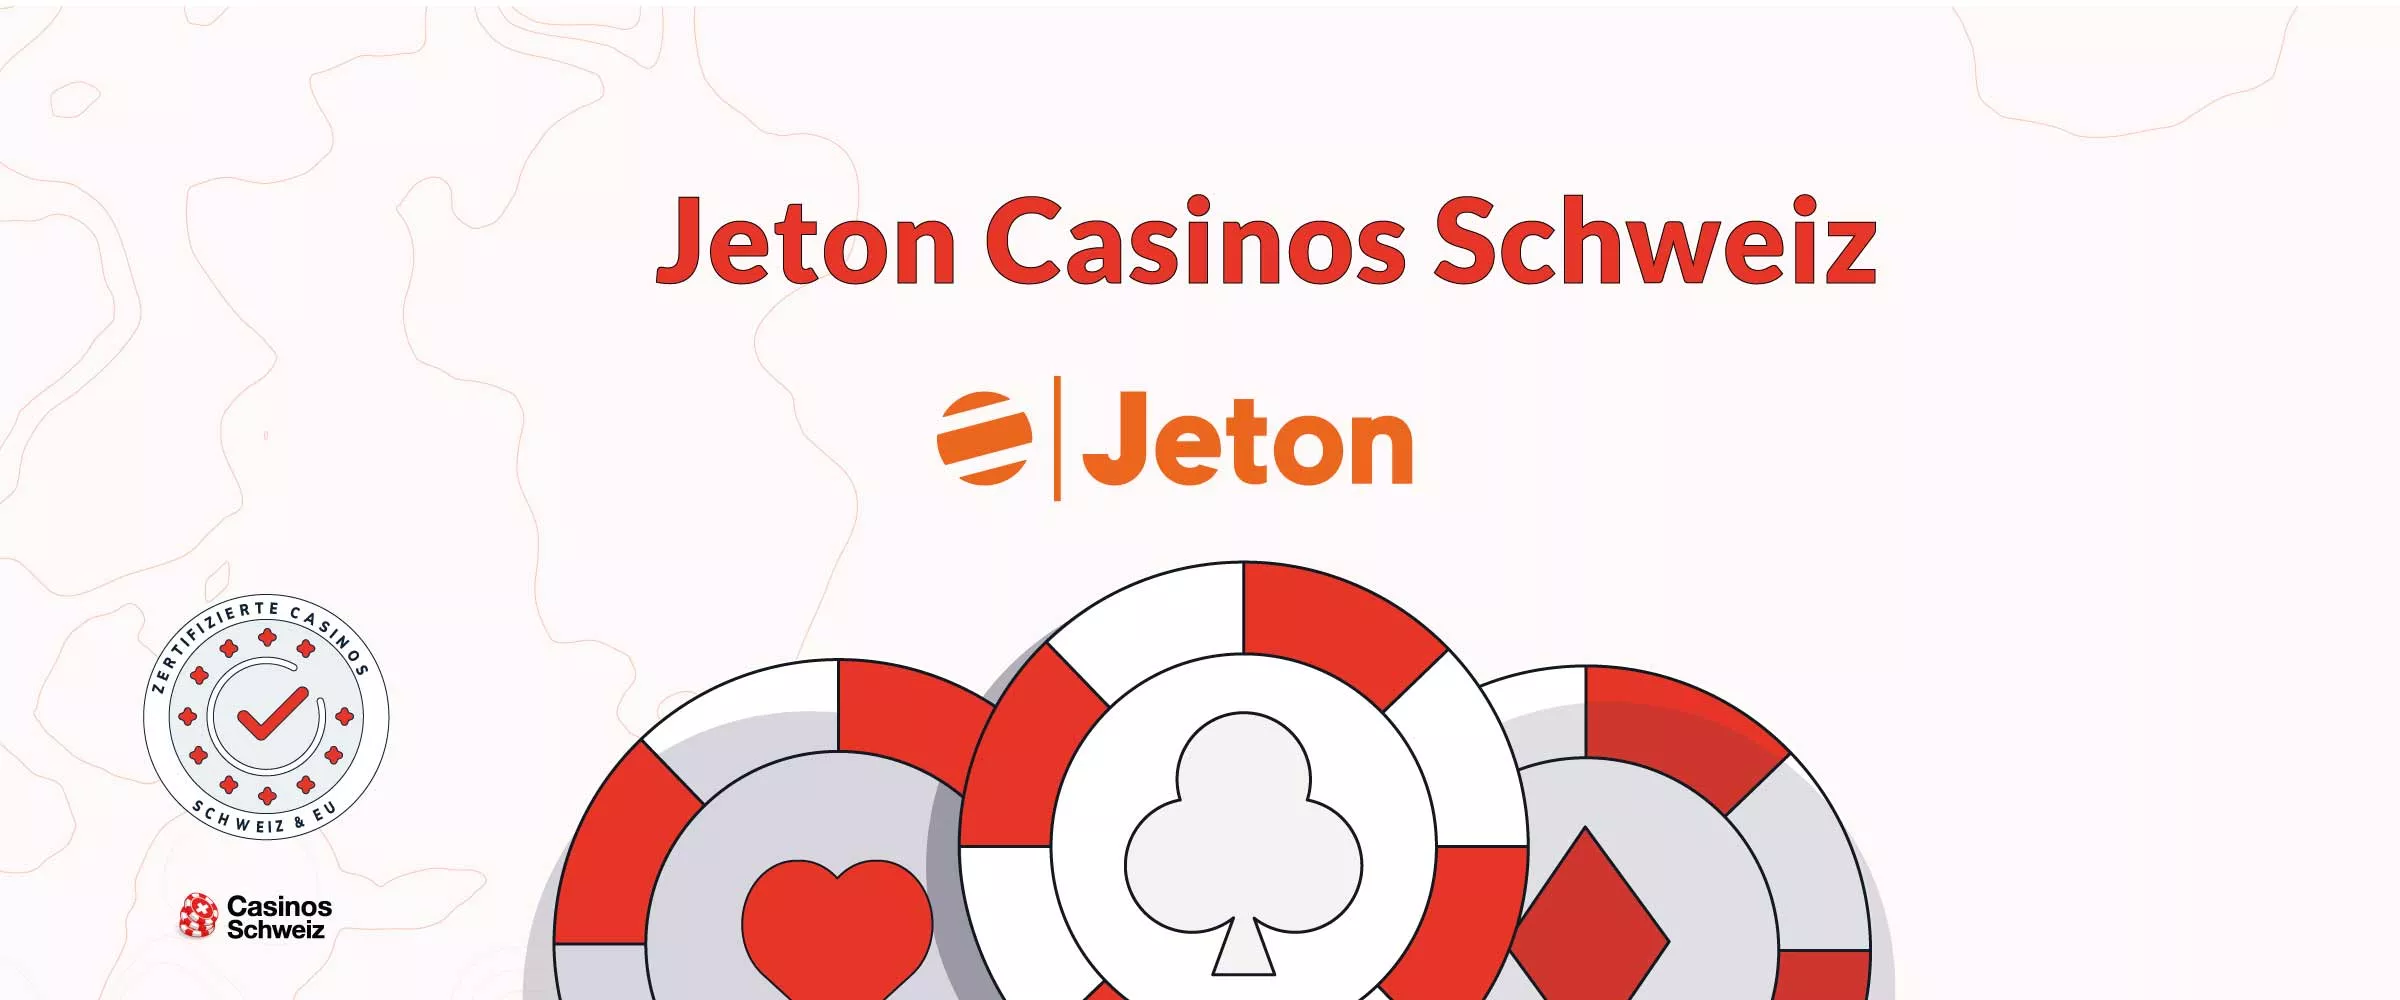 Jeton Casinos Schweiz